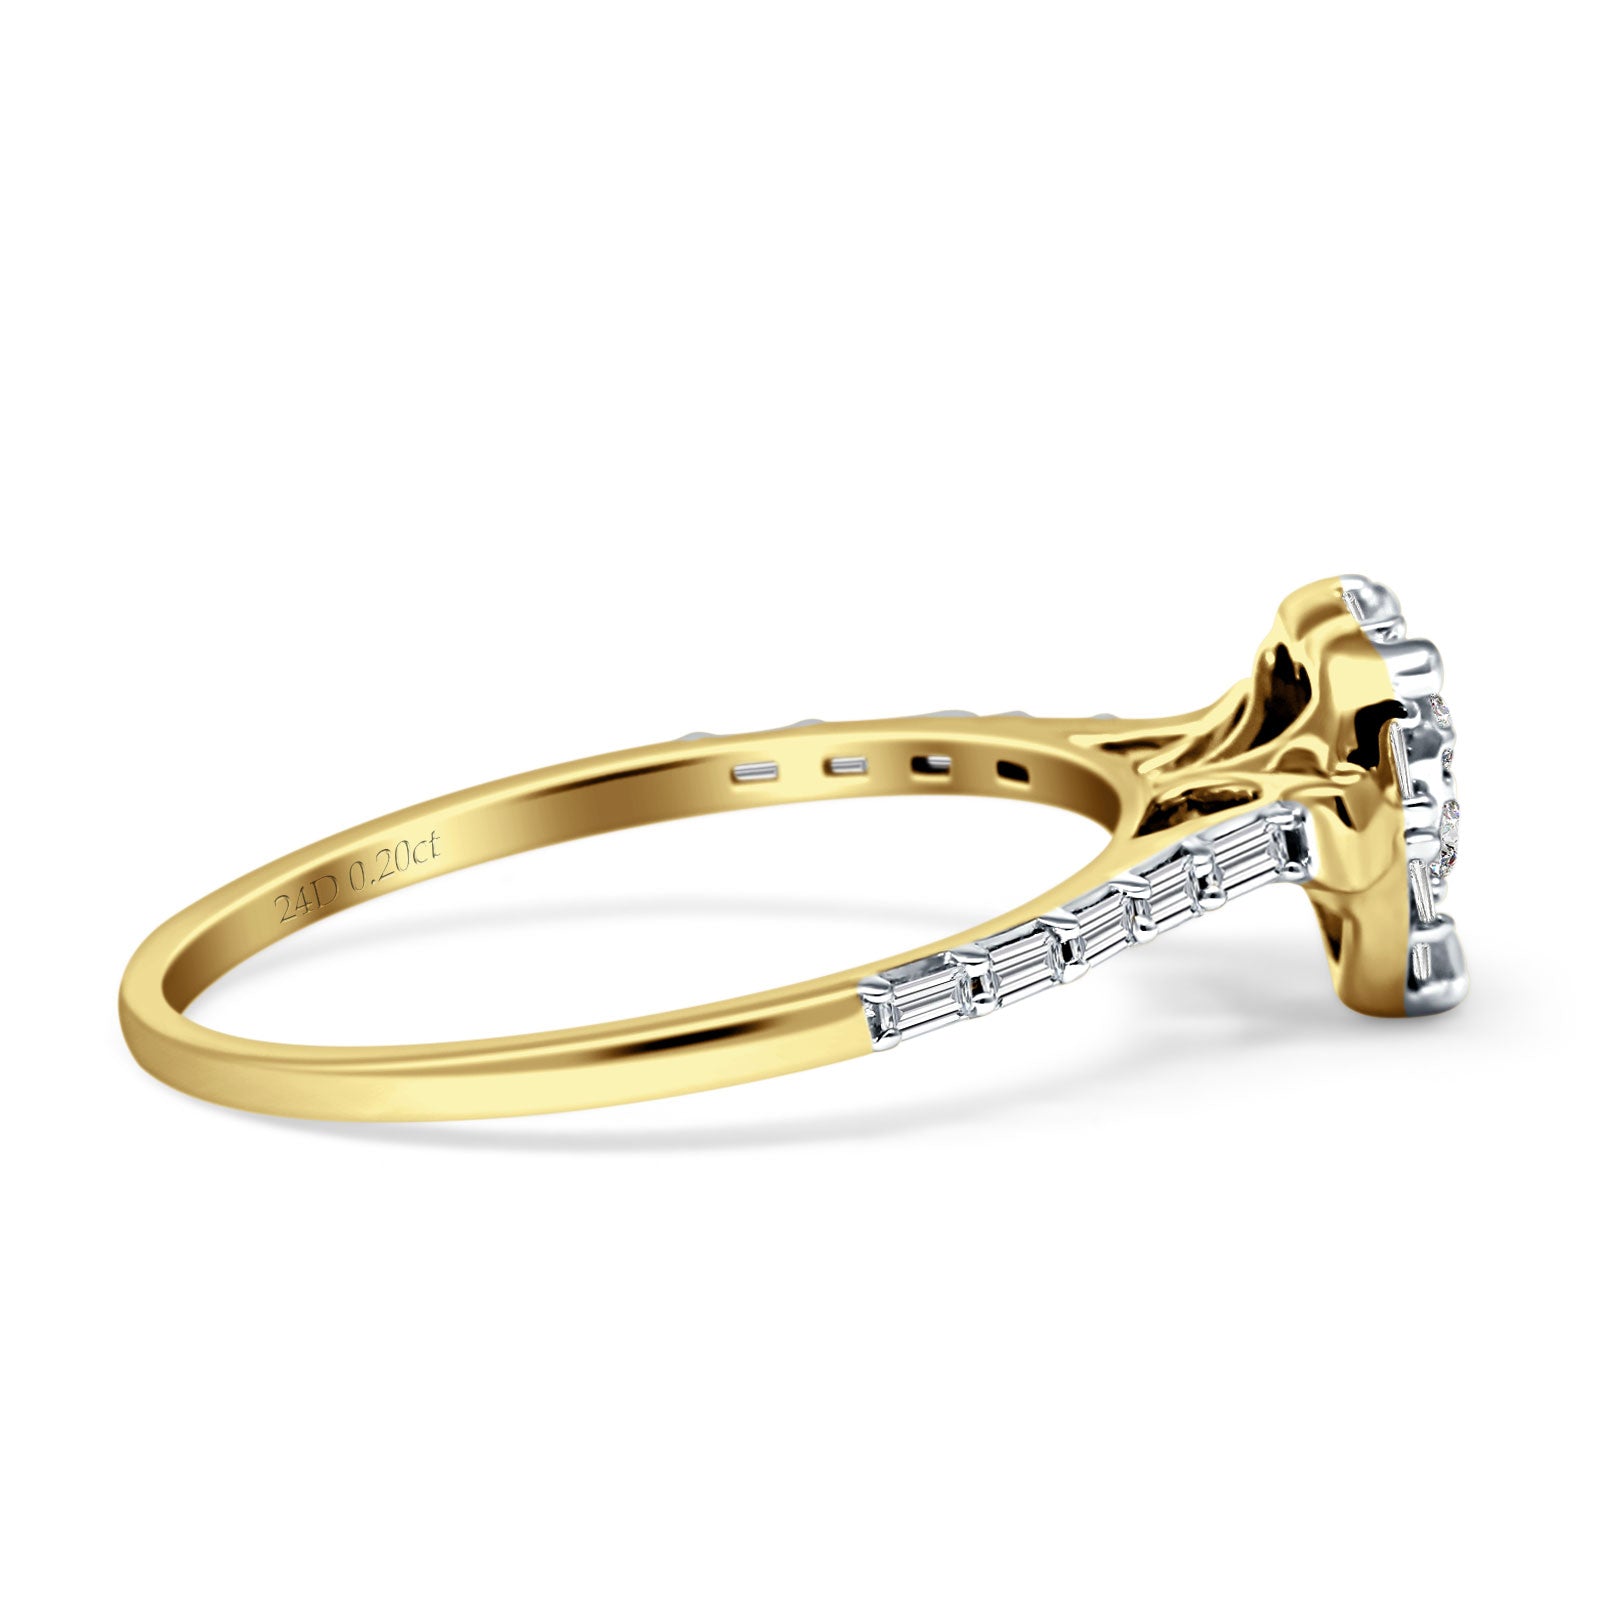 Heart Shaped Cluster Diamond Wedding Ring 14K Gold 0.20ct